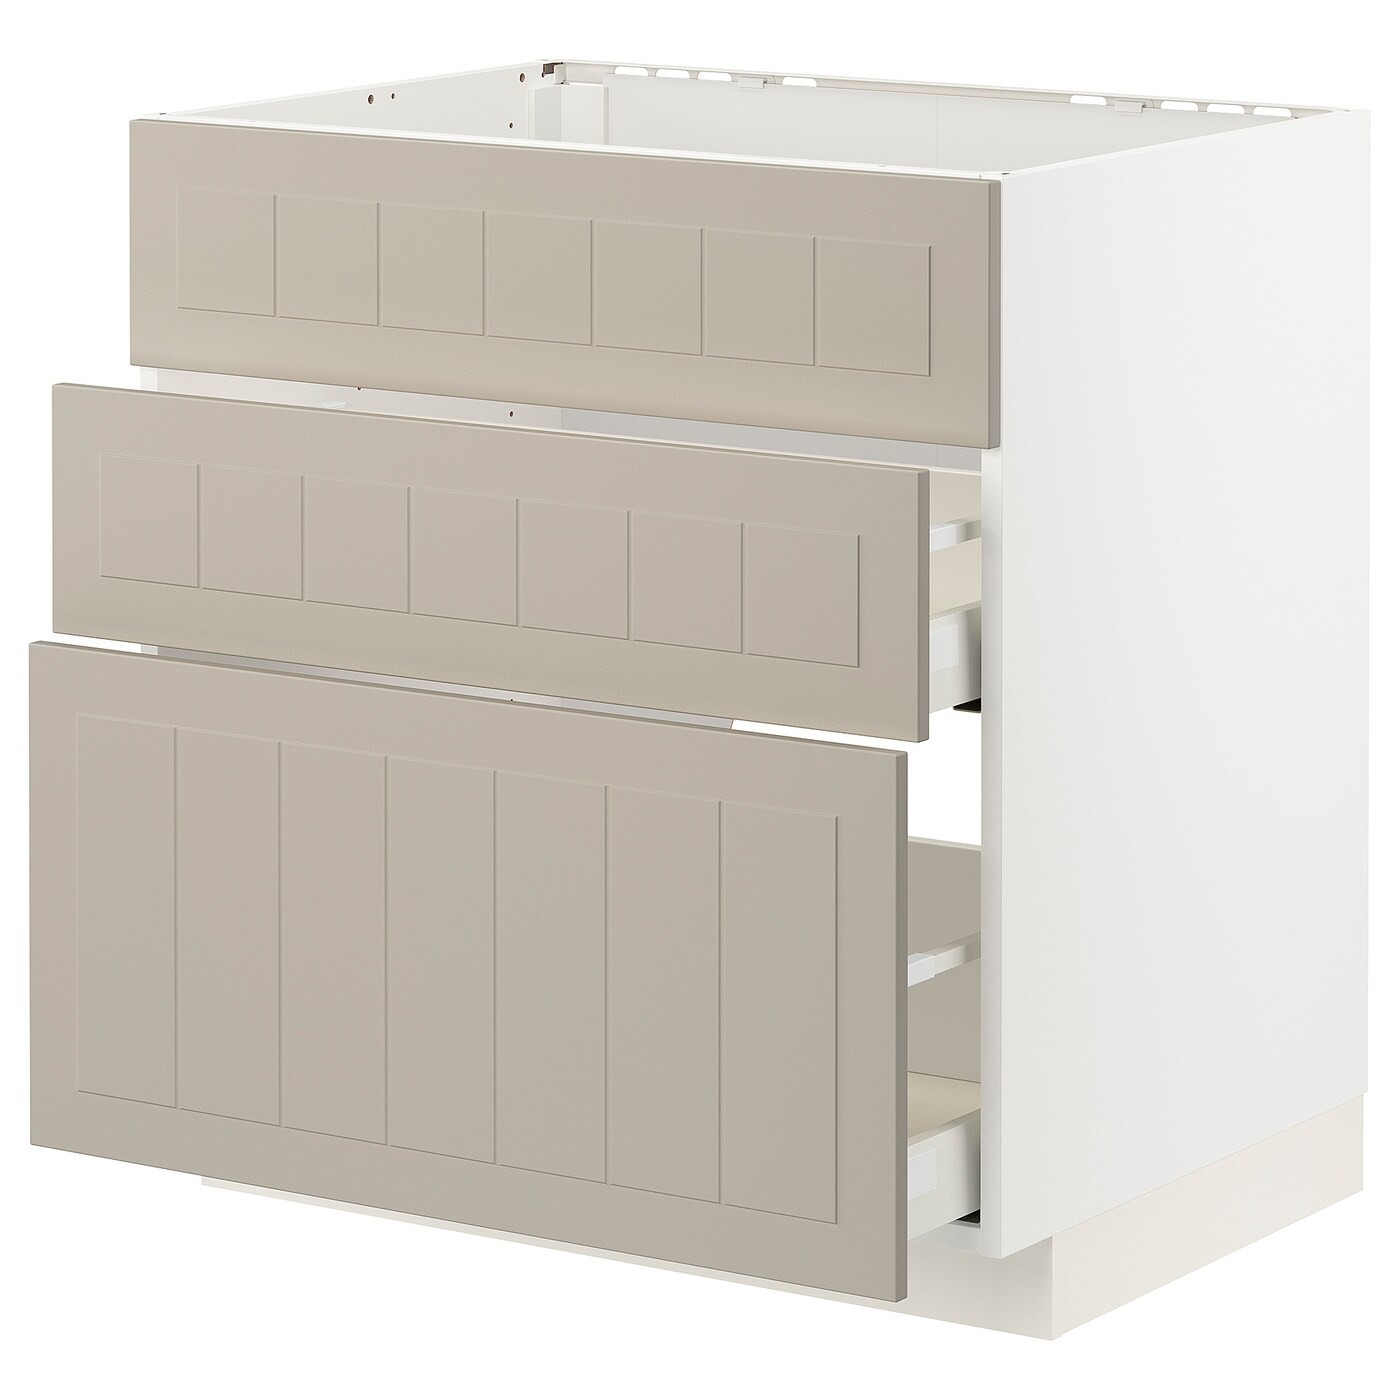 Напольный шкаф - METOD / MAXIMERA IKEA/ МЕТОД/ МАКСИМЕРА ИКЕА,  80х80 см, белый/бежевый